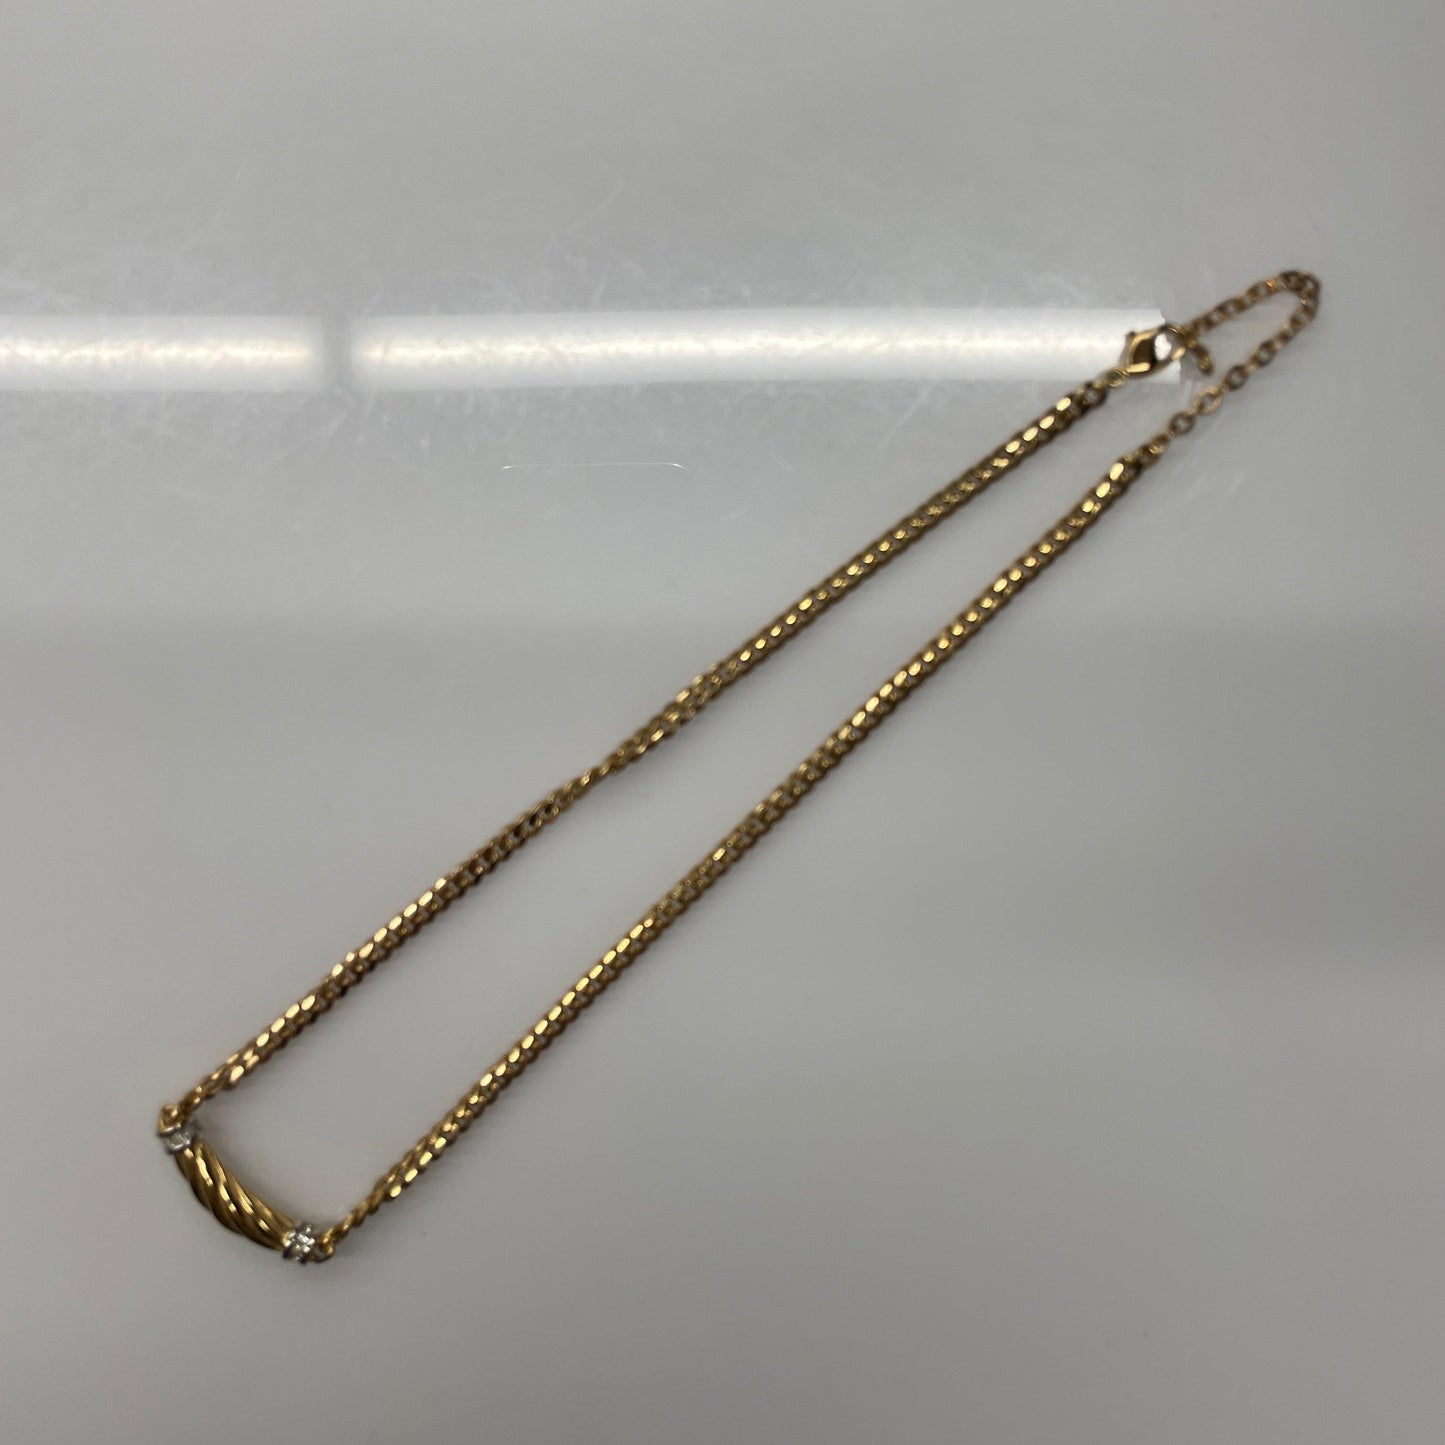 Burberrys necklace